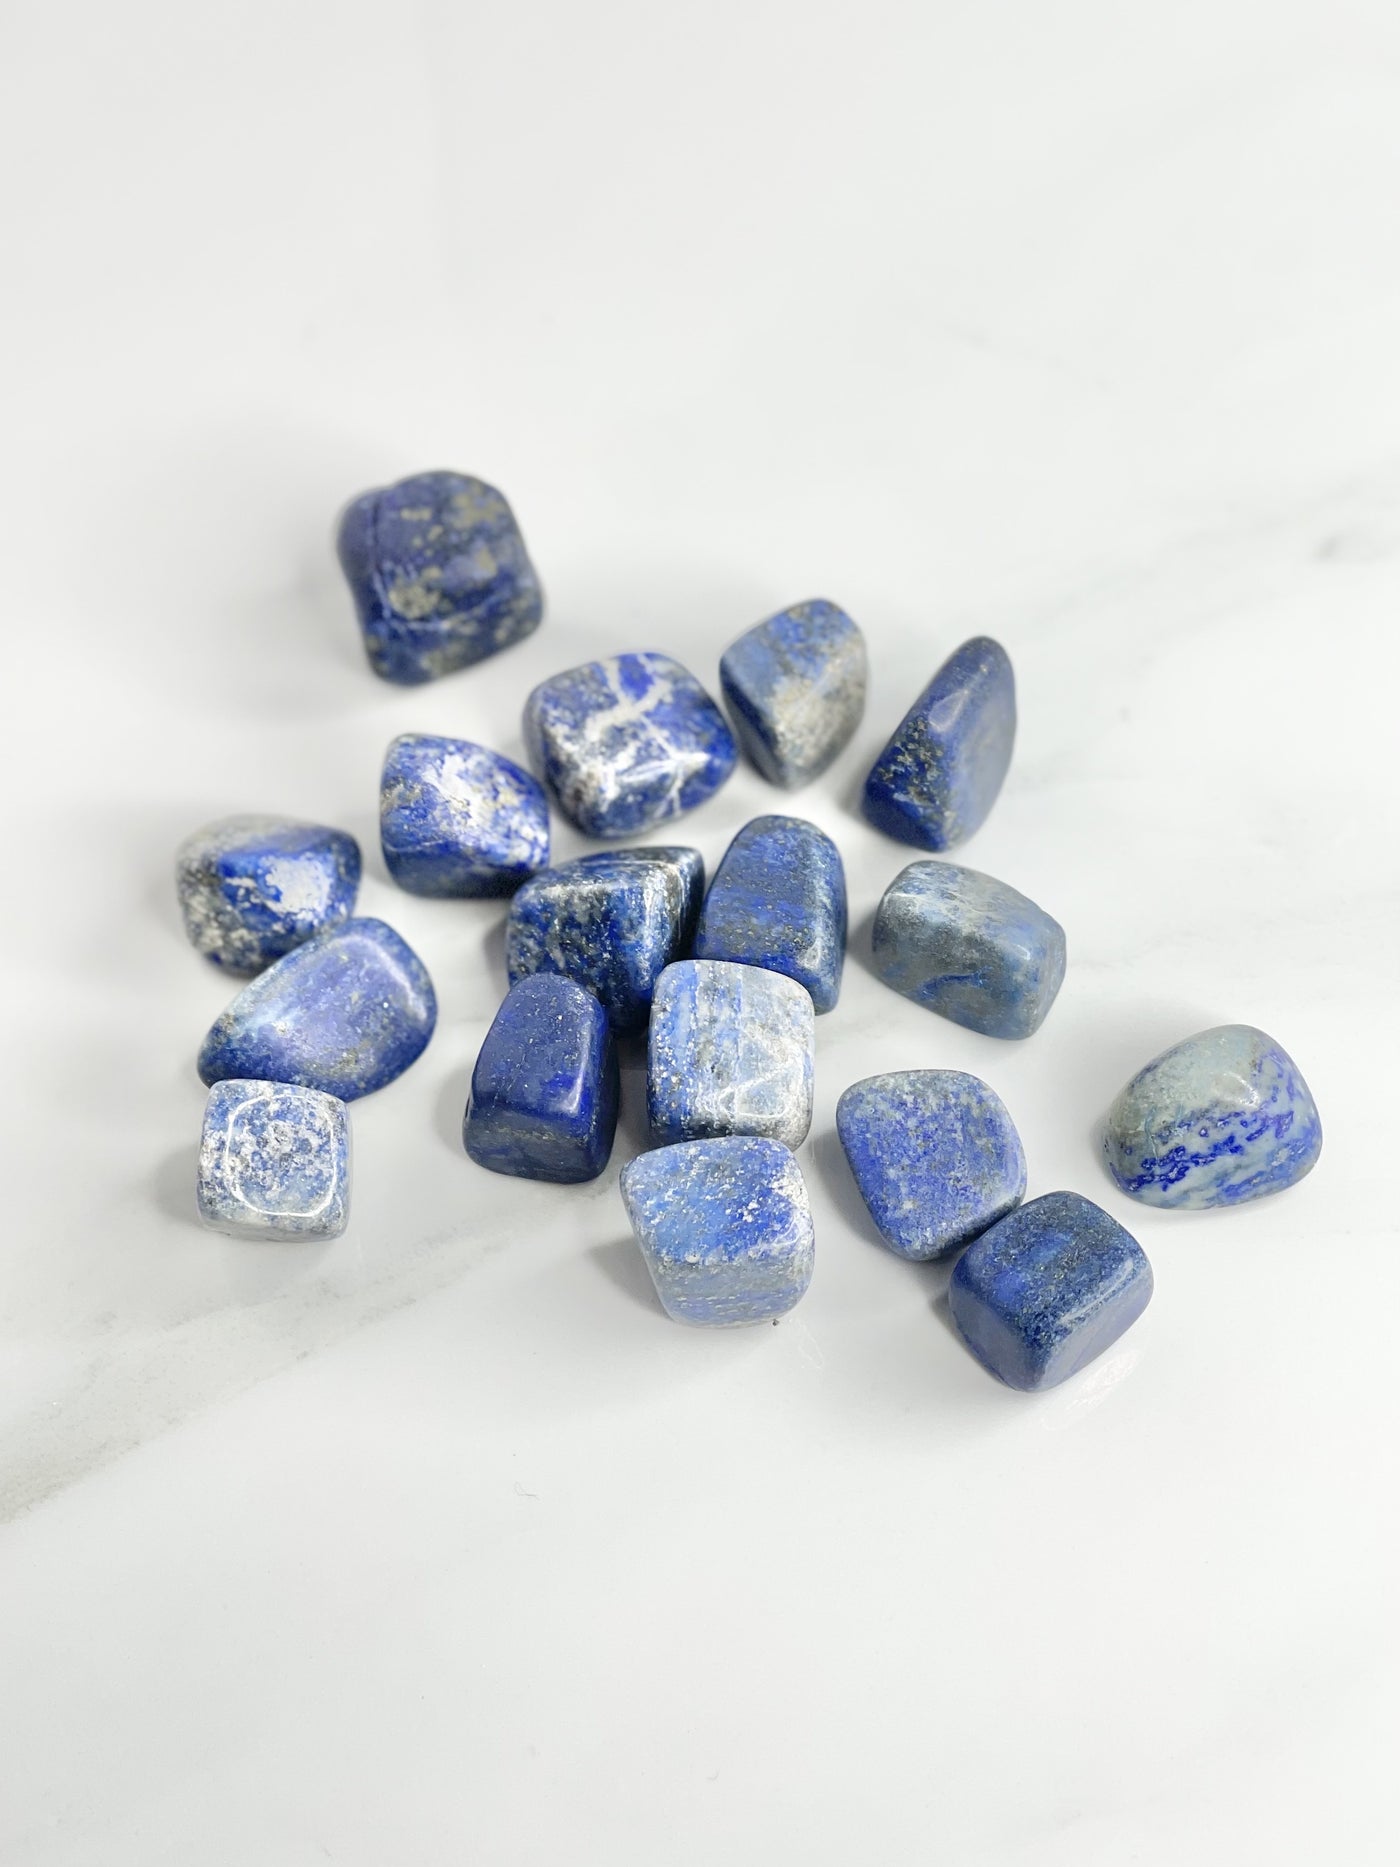 Lapis Lazuli - The Stone of Wisdom